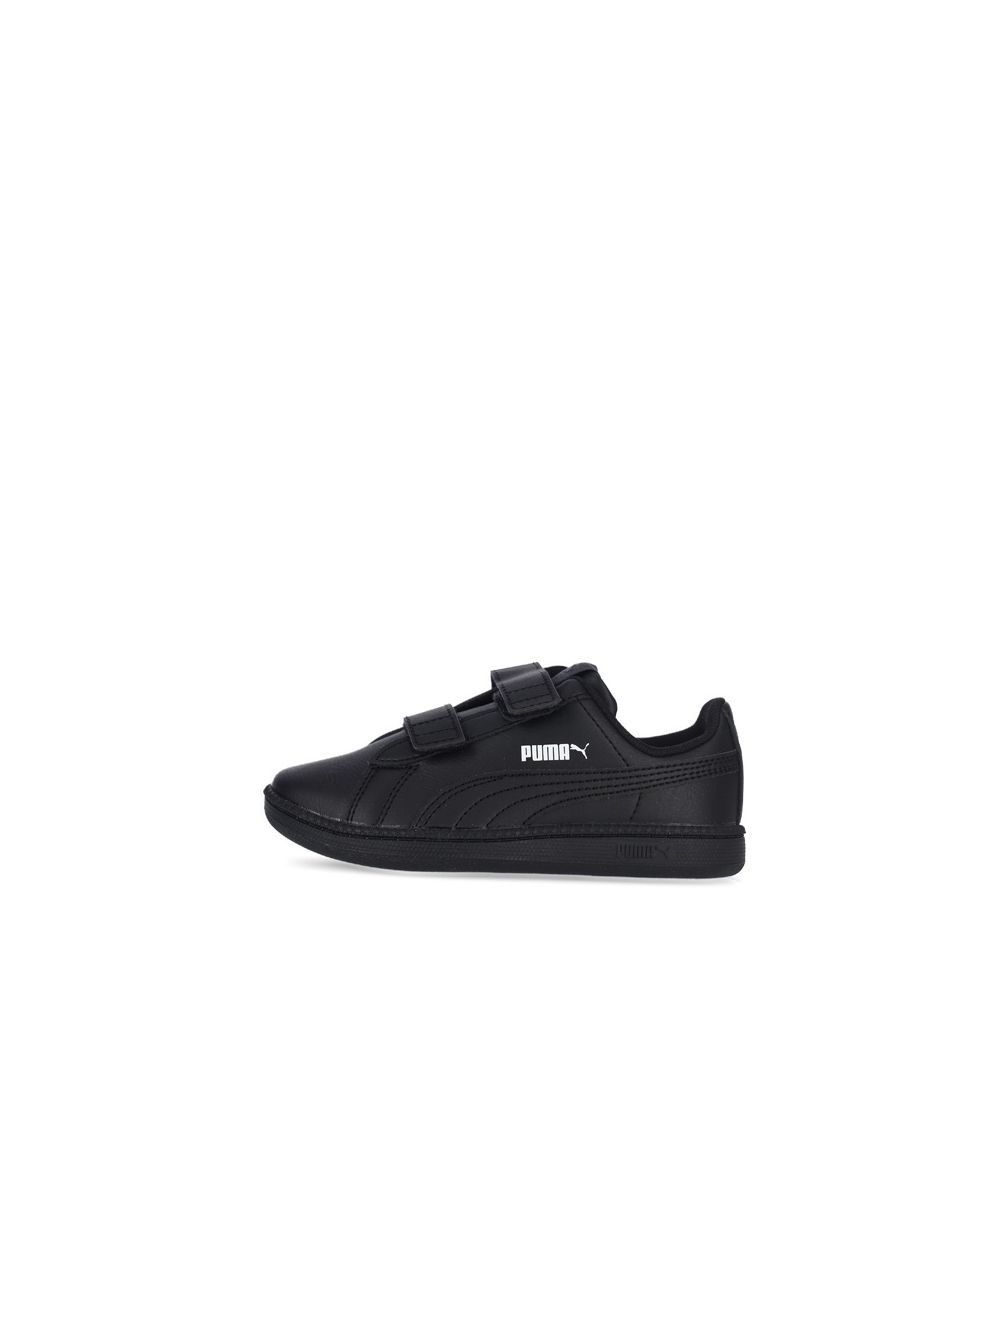 Shop Puma UP Kids Sneakers Black | Studio 88